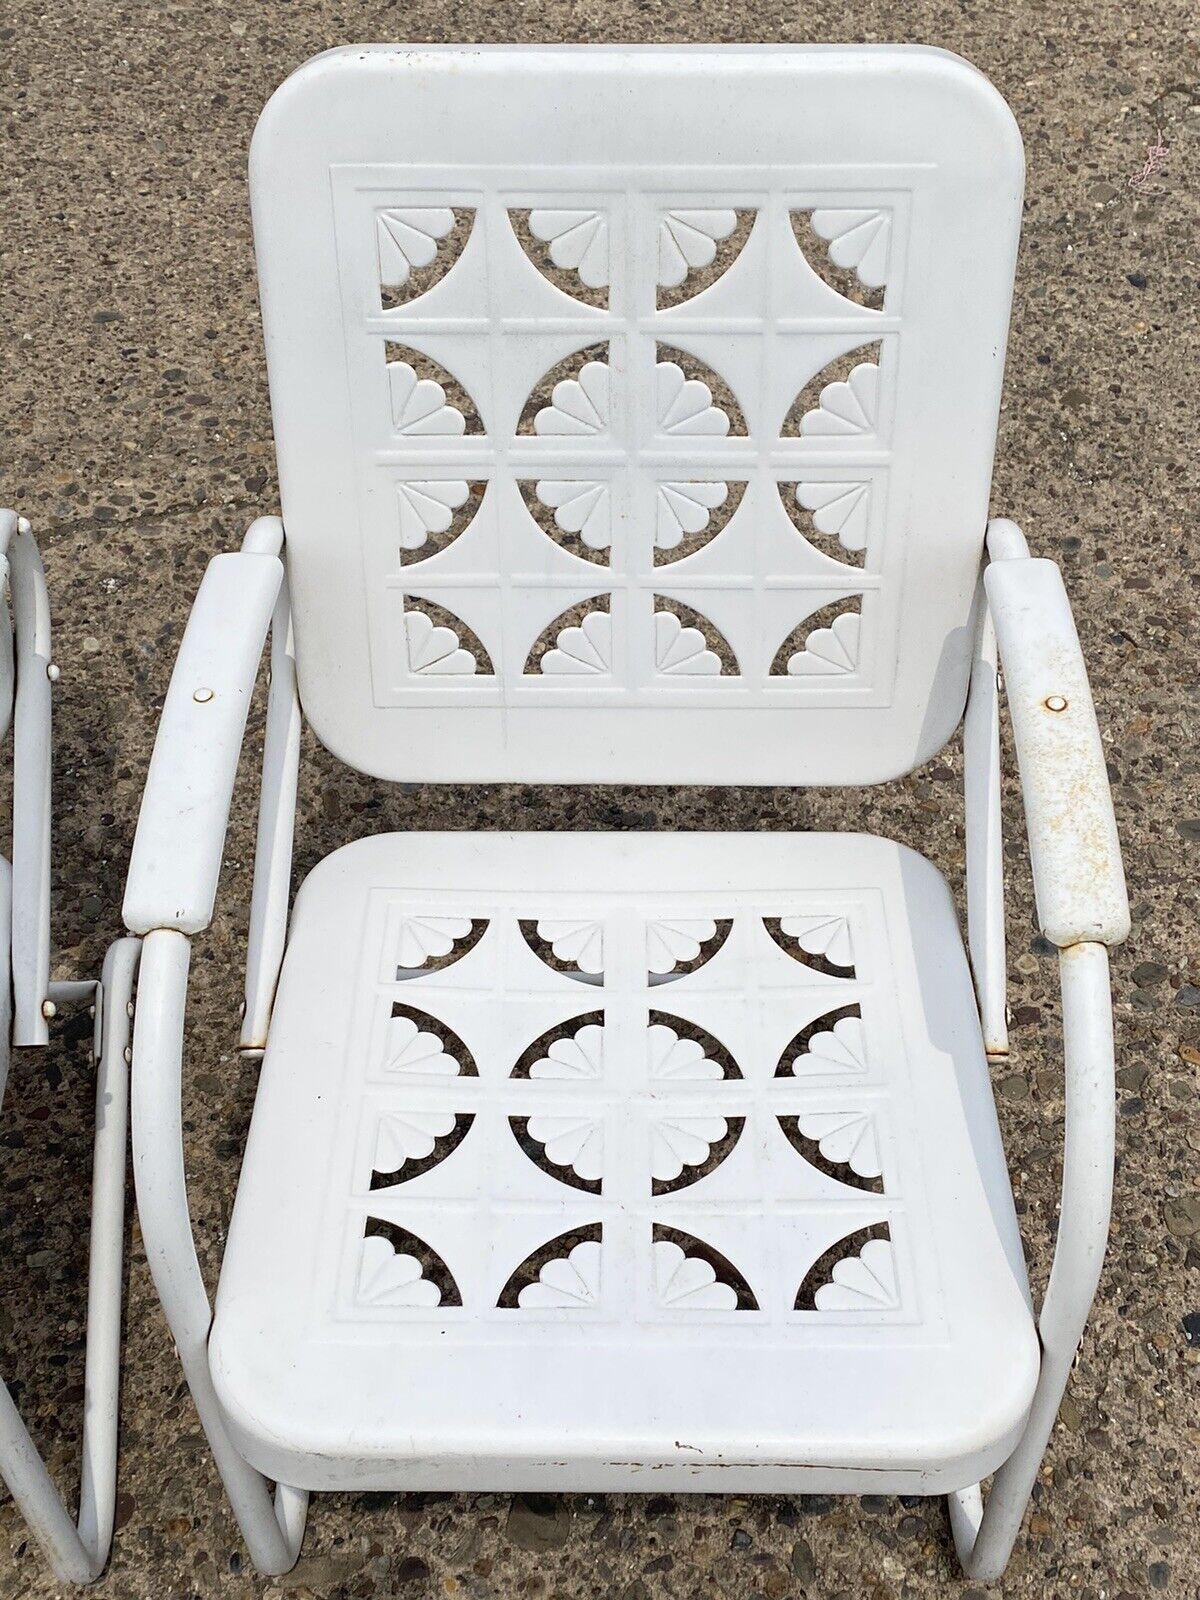 Vintage Starburst Pie Crest Metal Outdoor Patio Springer Lounge Chairs - a Pair